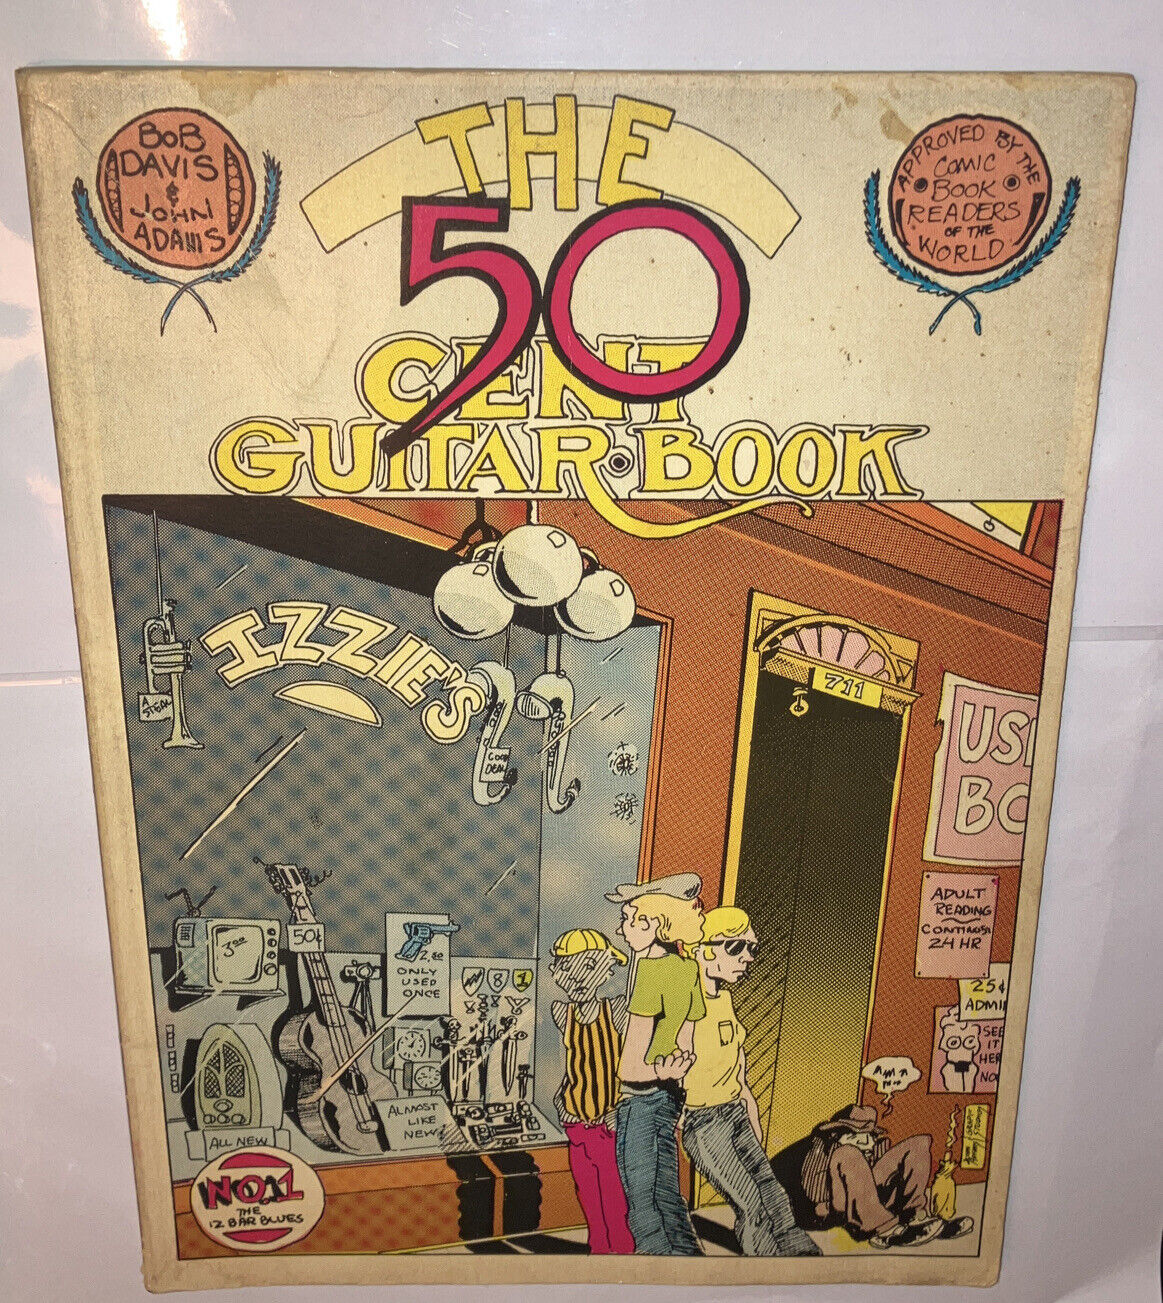 THE 50 CENT GUITAR BOOK #1 1974 Paperback Comic BOB DAVIS & JOHN ADAMS ShipsFree